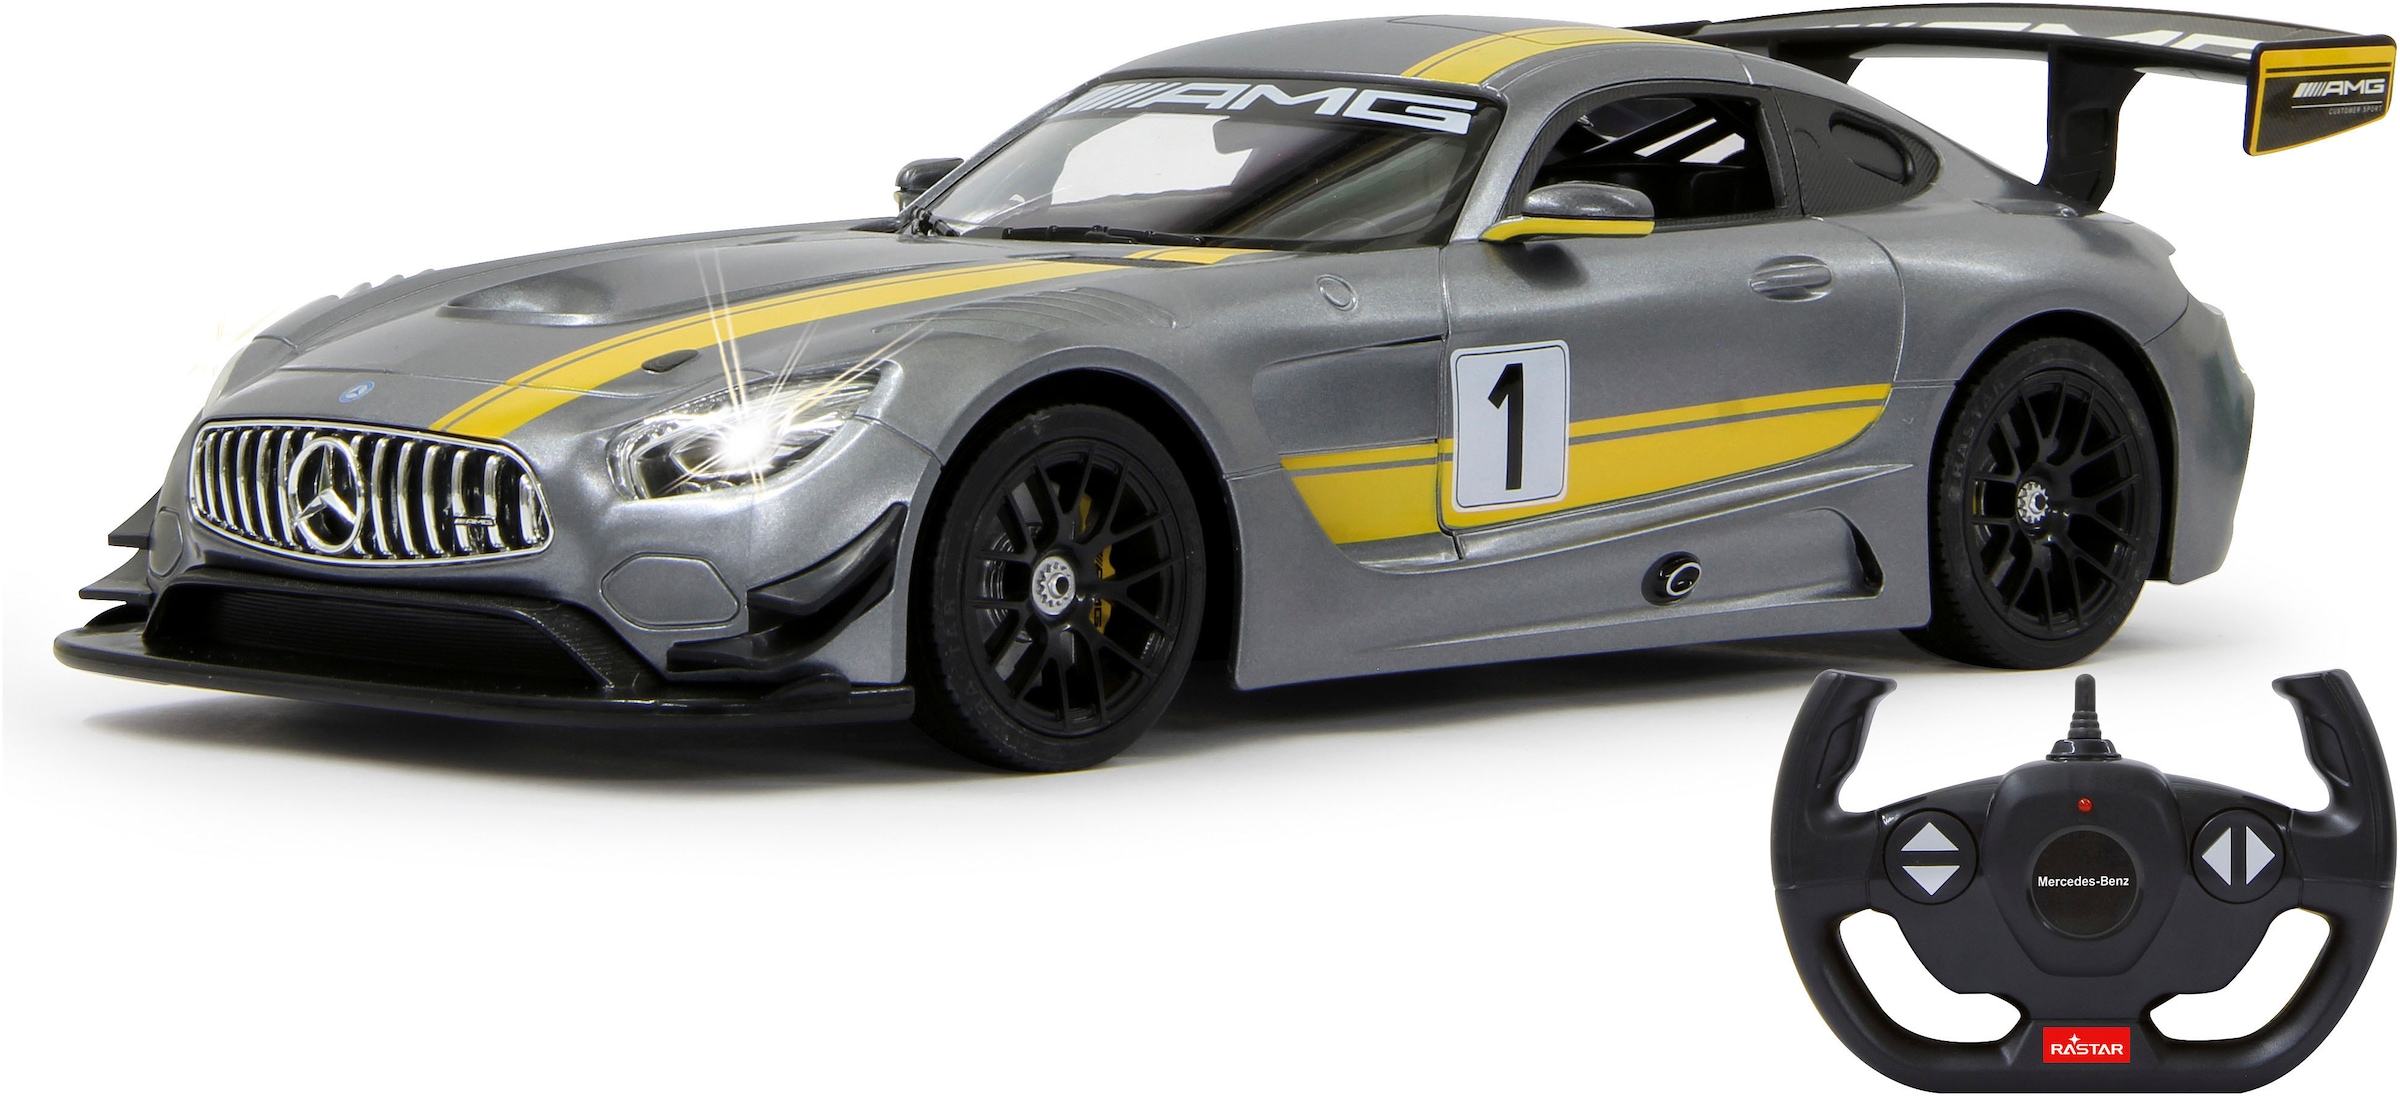 Jamara RC-Auto »Deluxe Cars, Mercedes-AMG GT3 Performance, 1:14, grau, 2,4GHz«, mit LED-Licht